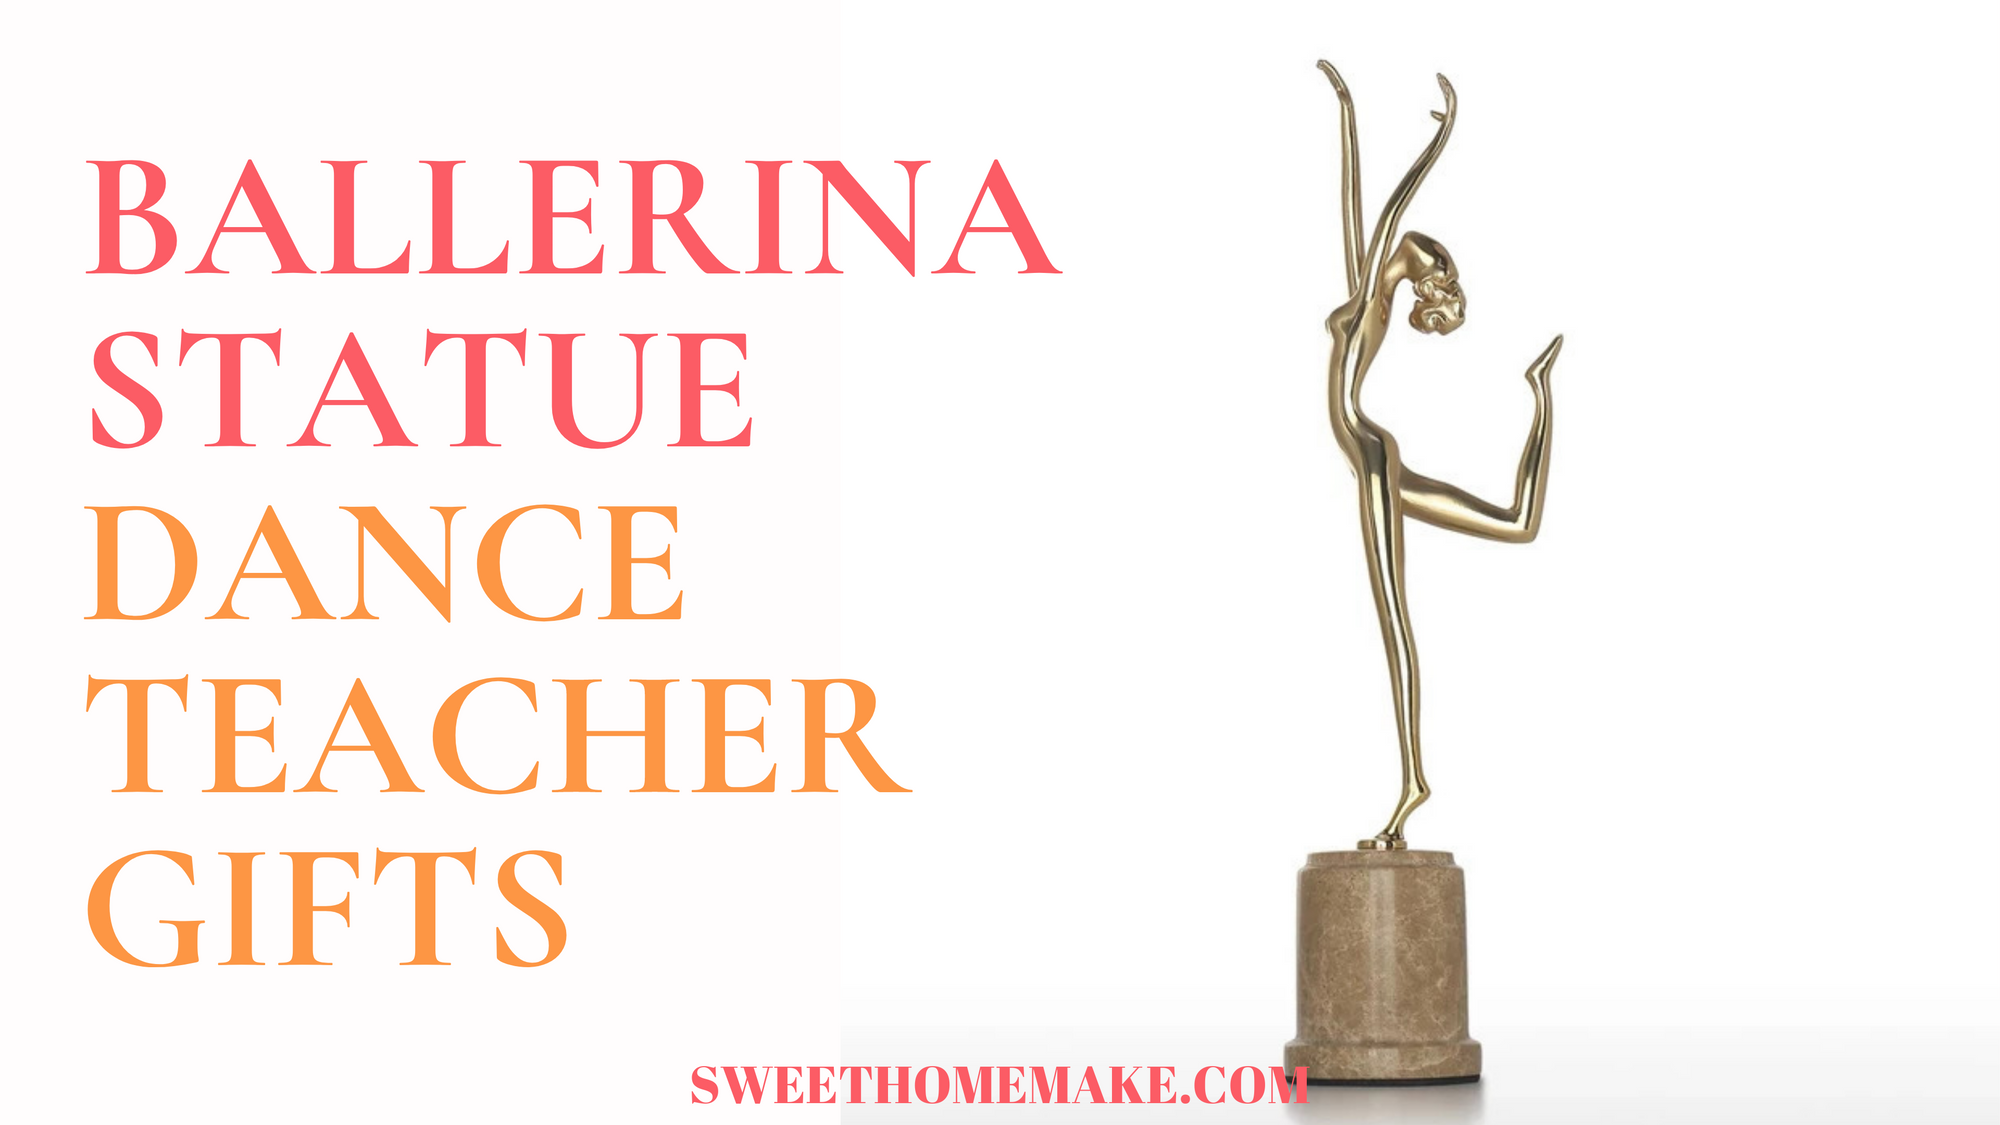 Dance Teacher Gifts and Dance Recital Gifts by Ballerina Statue